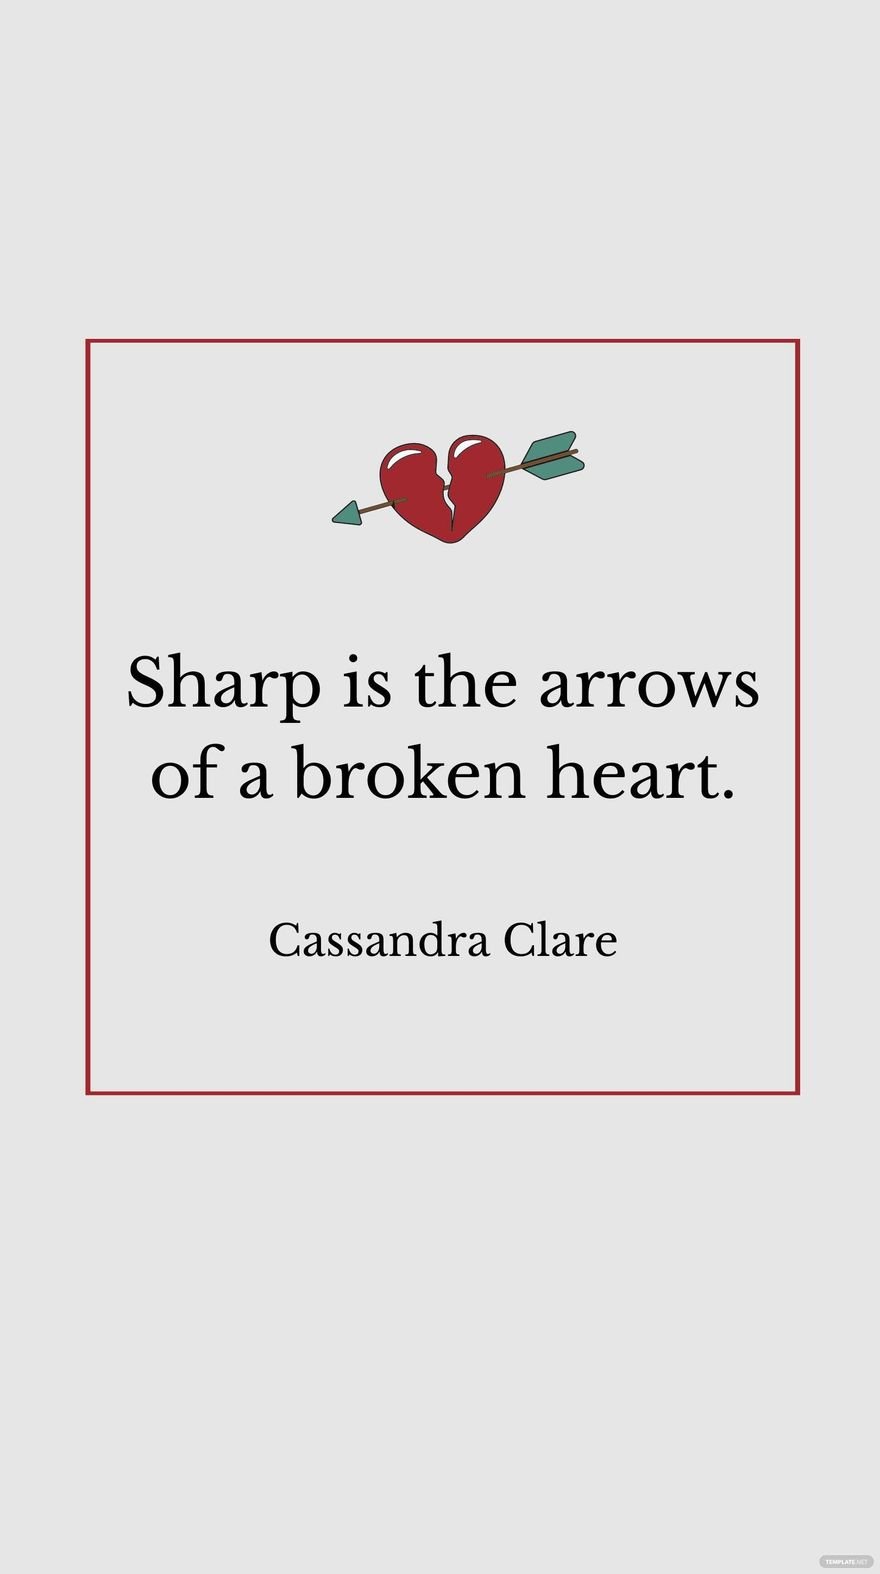 Cassandra Clare - Sharp is the arrows of a broken heart.